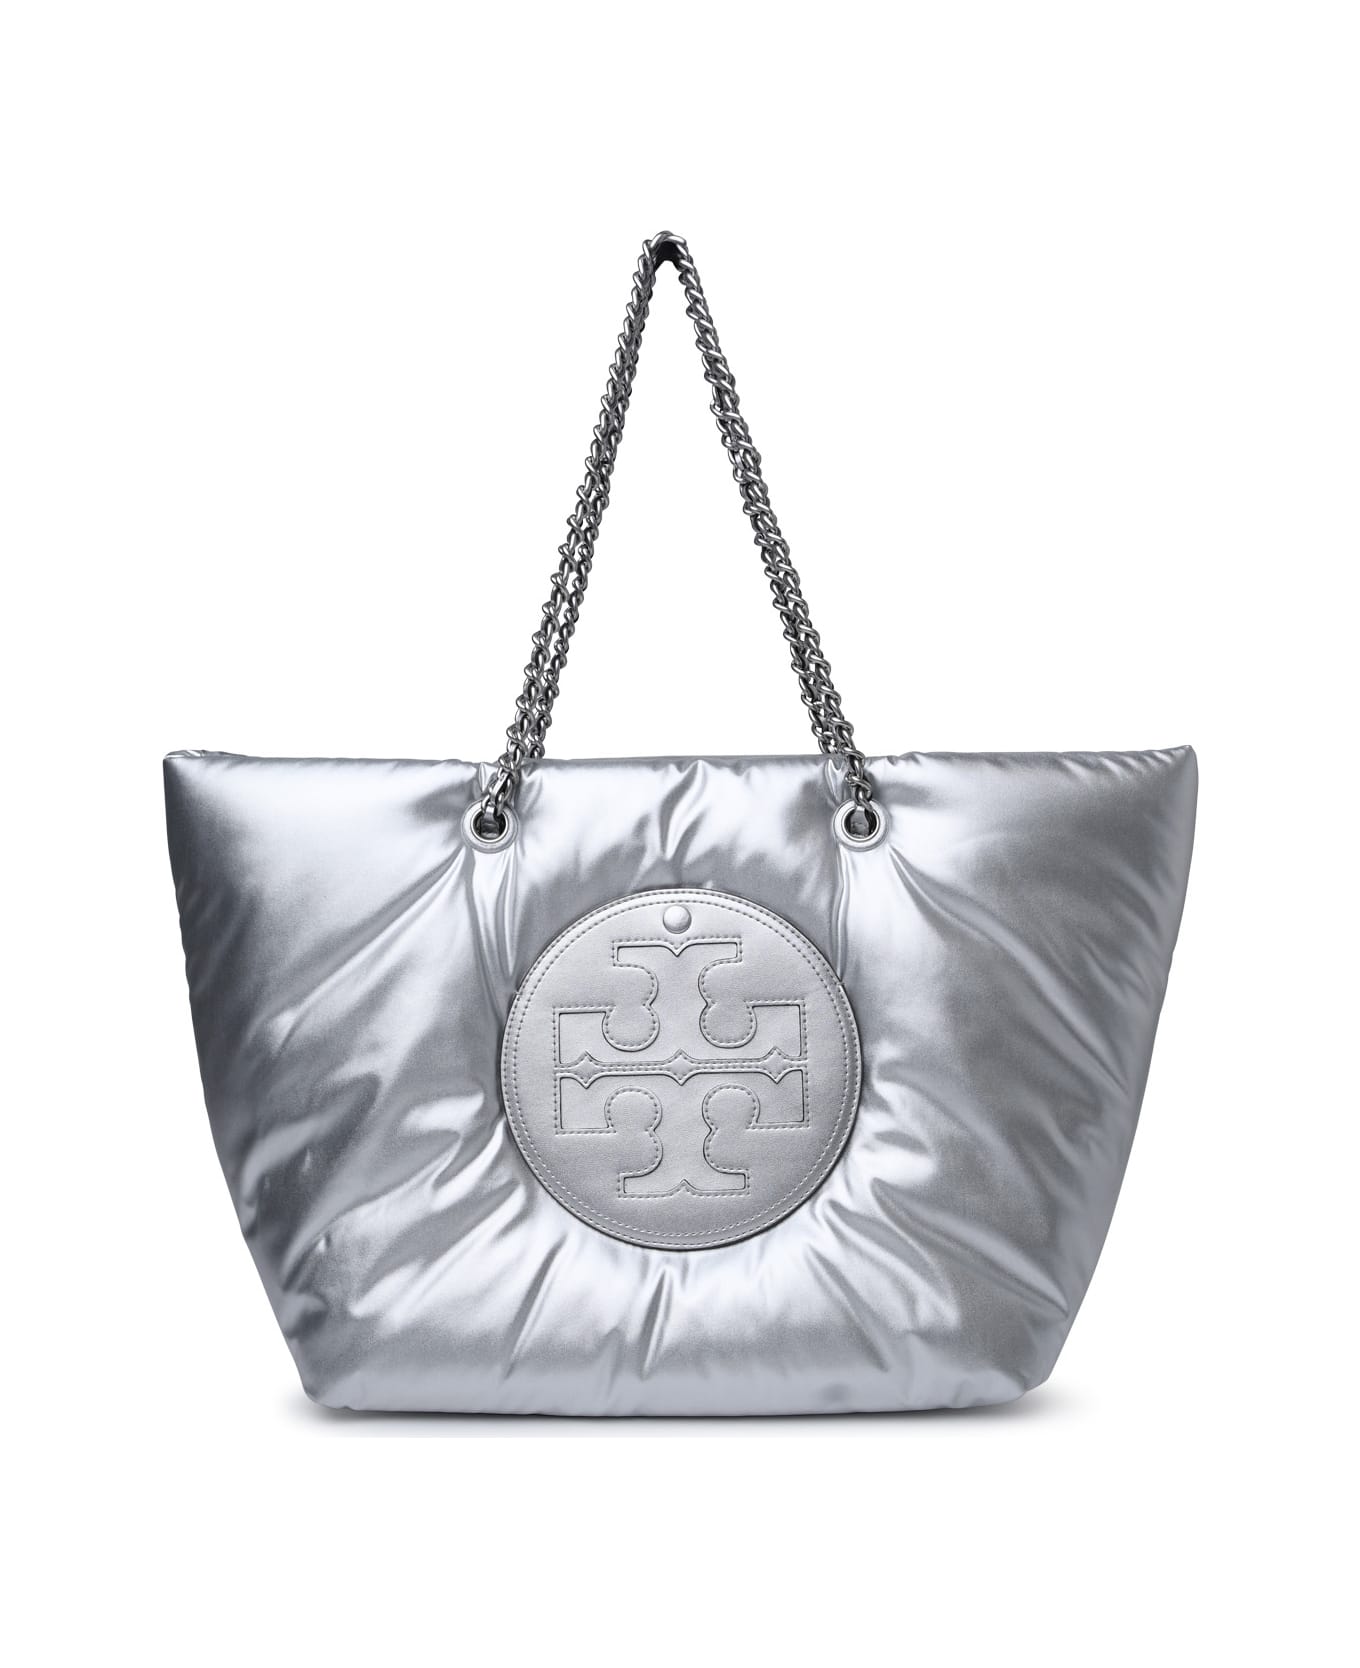 Tory Burch 'ella' Silver Polyester Shopping Bag - Argento